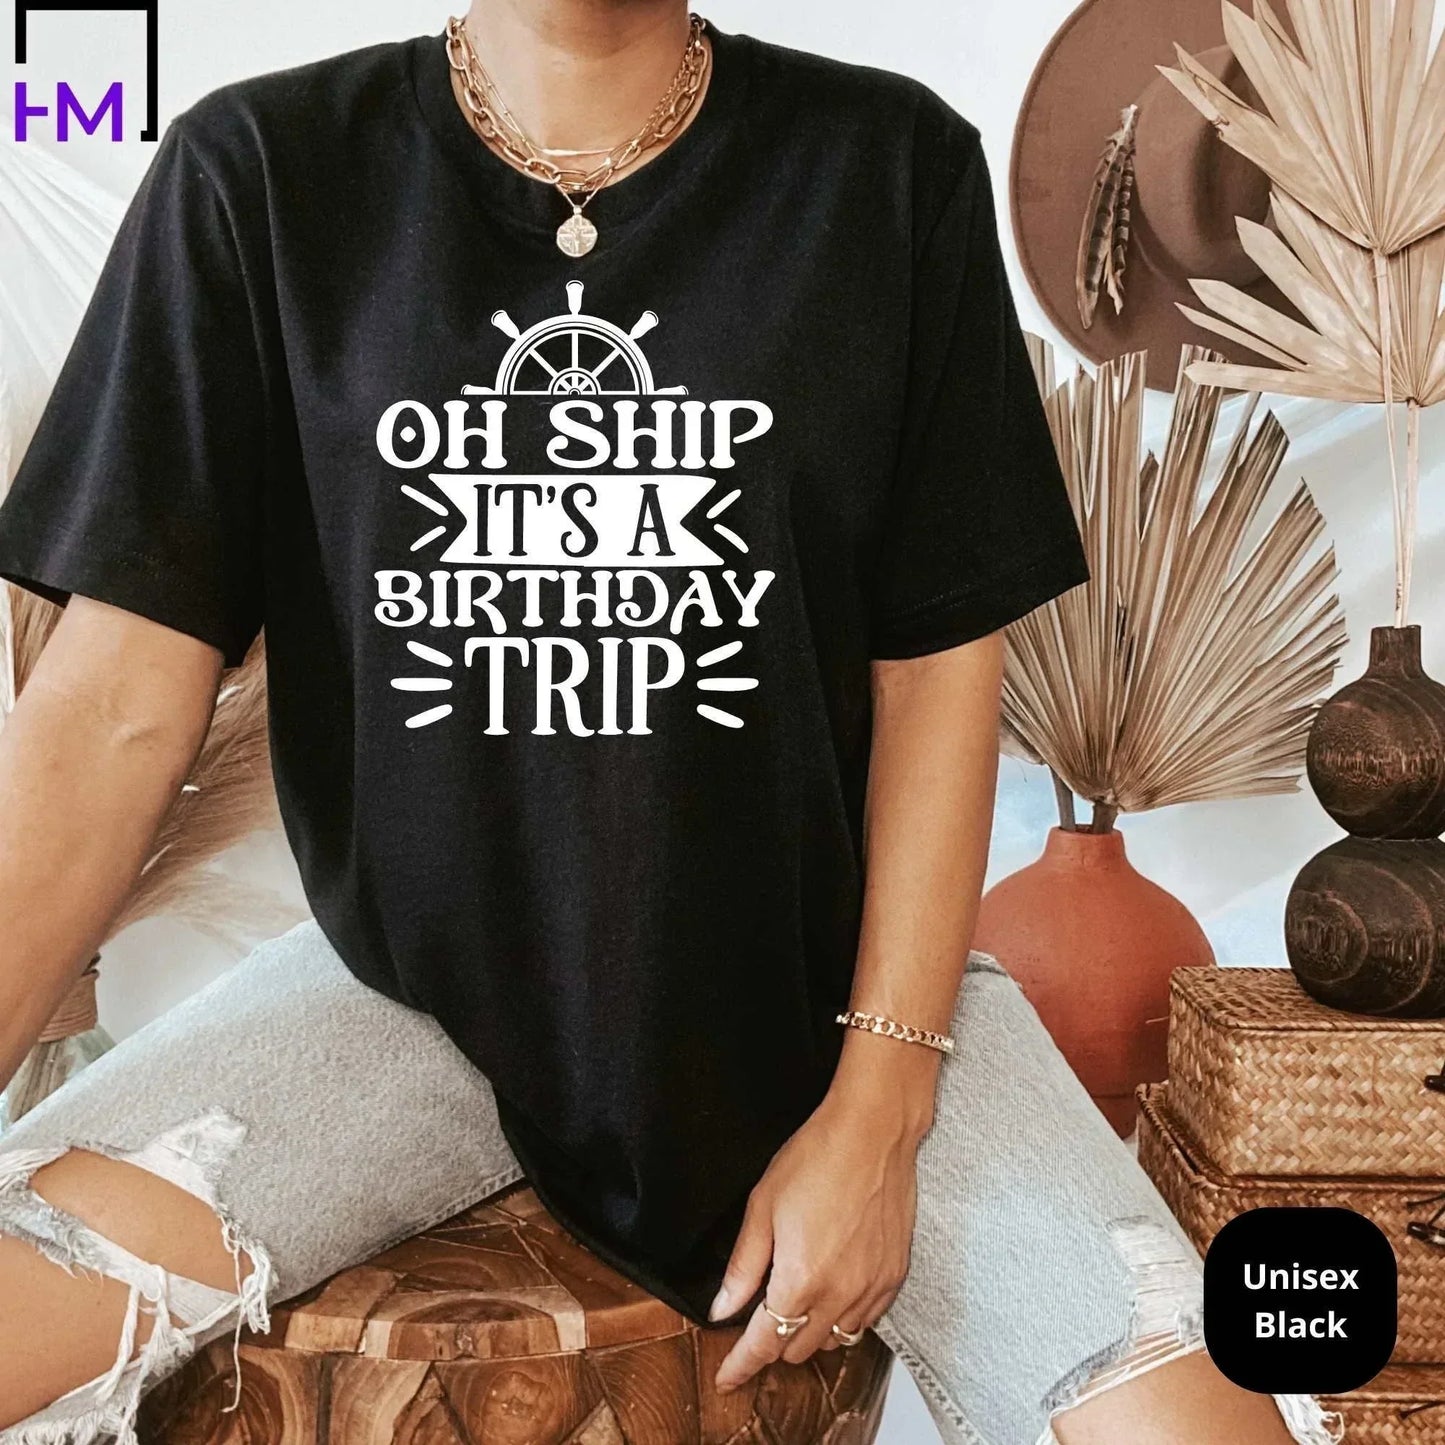 Oh Ship It's a Birthday Trip, Birthday Cruise Shirts for Girls Trip